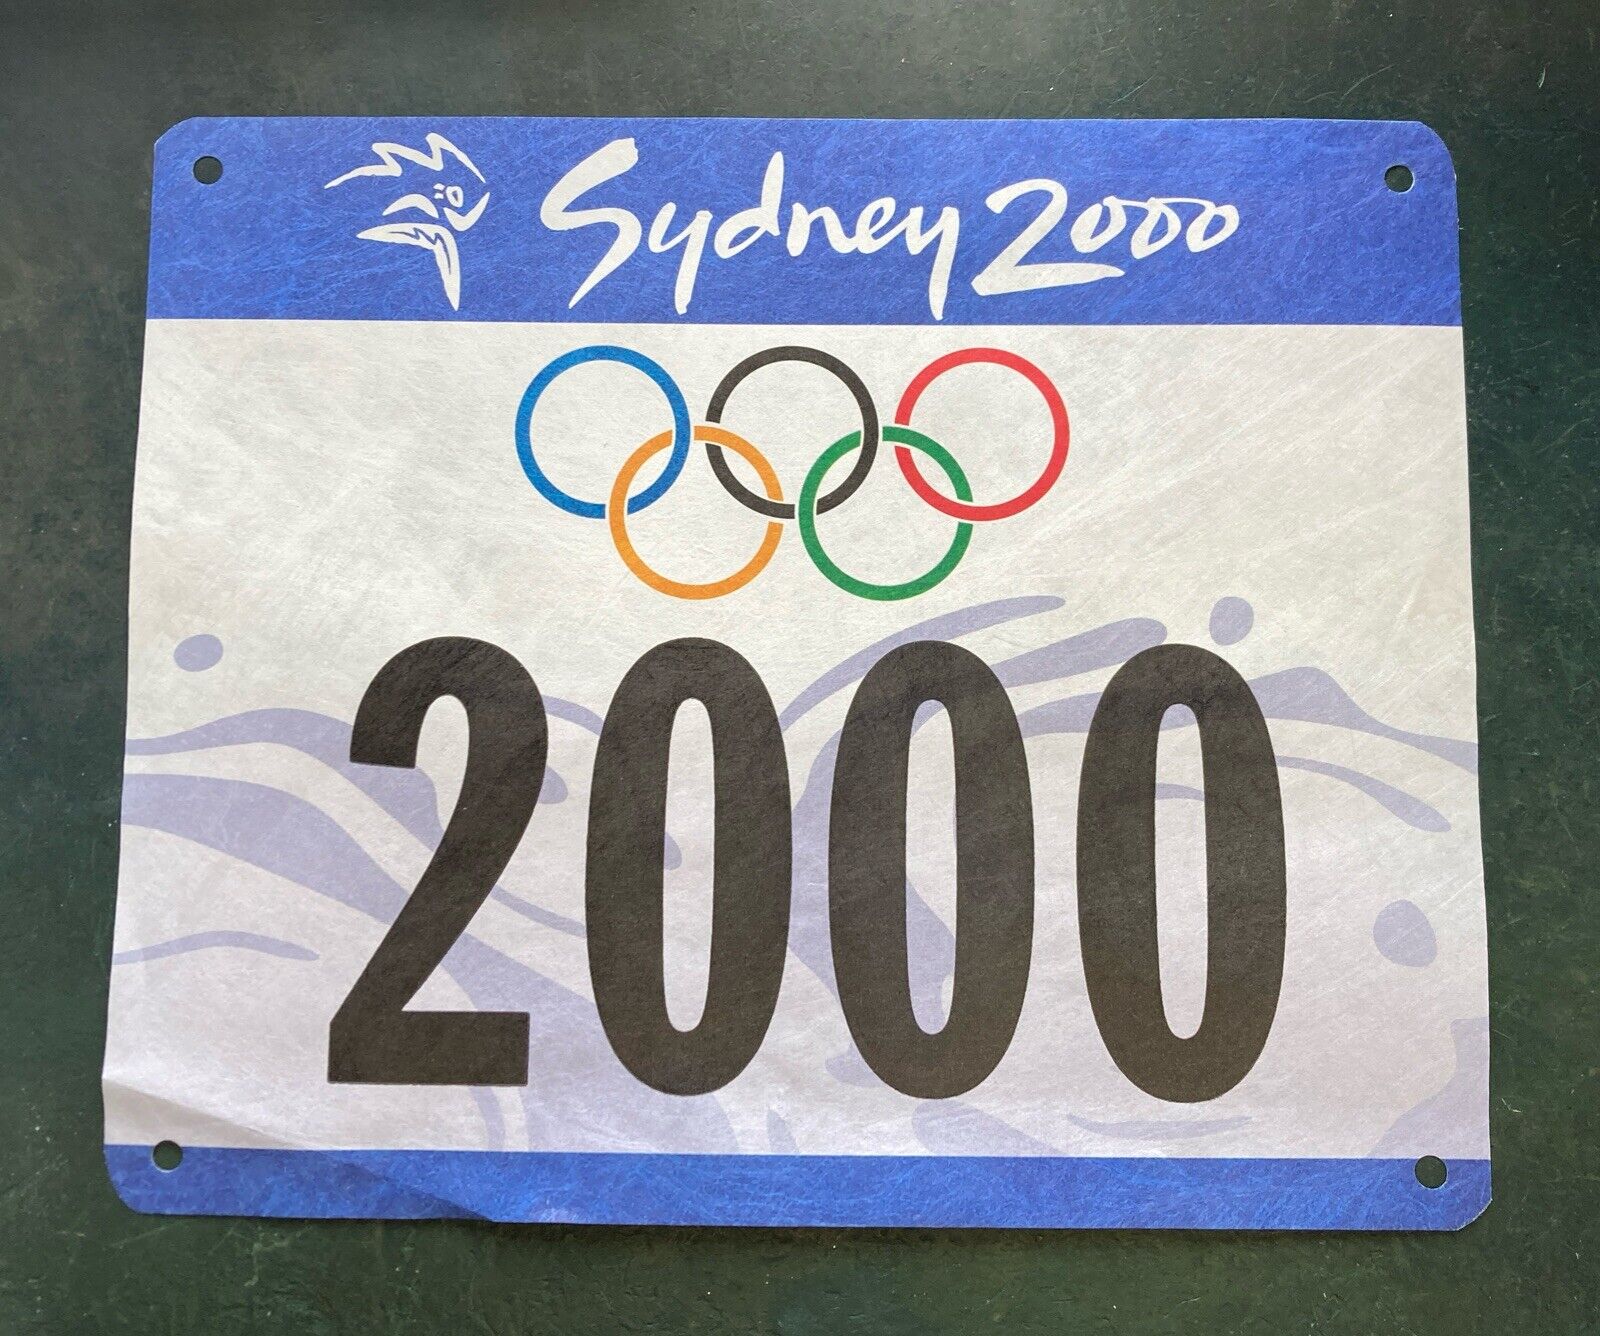 Sydney 2000 Olympics Athlete Number